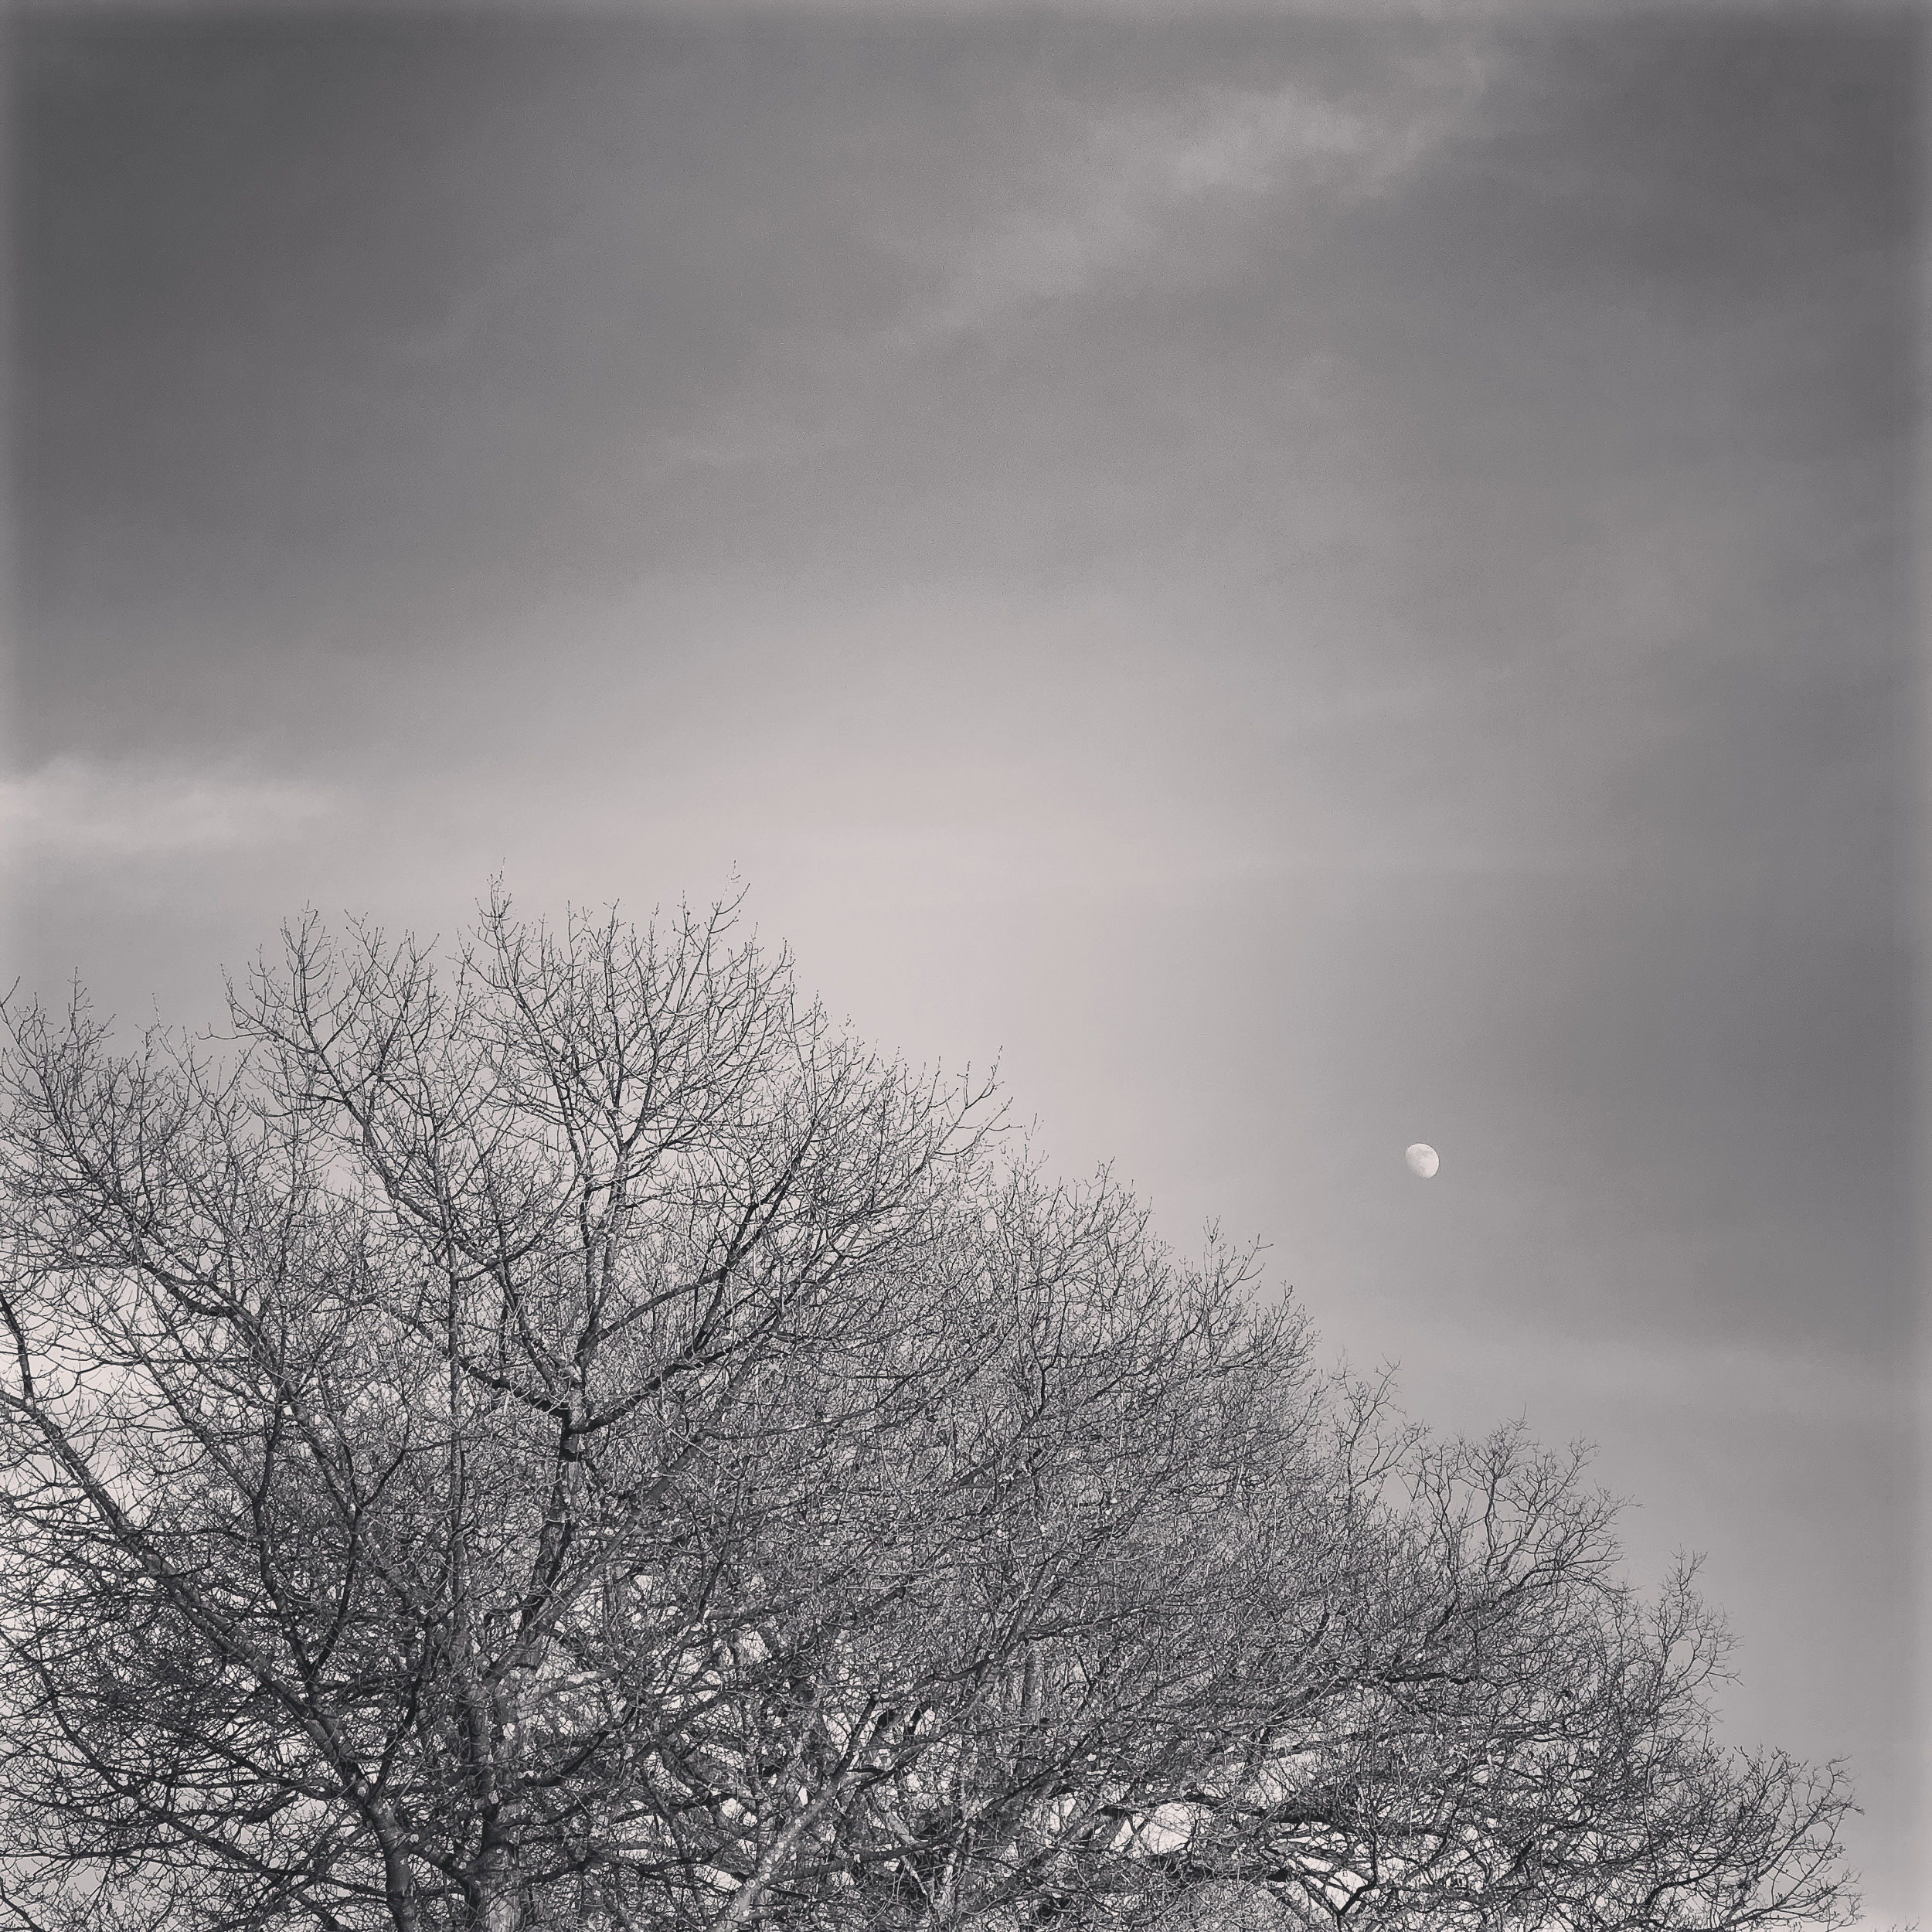 Moon over treetops